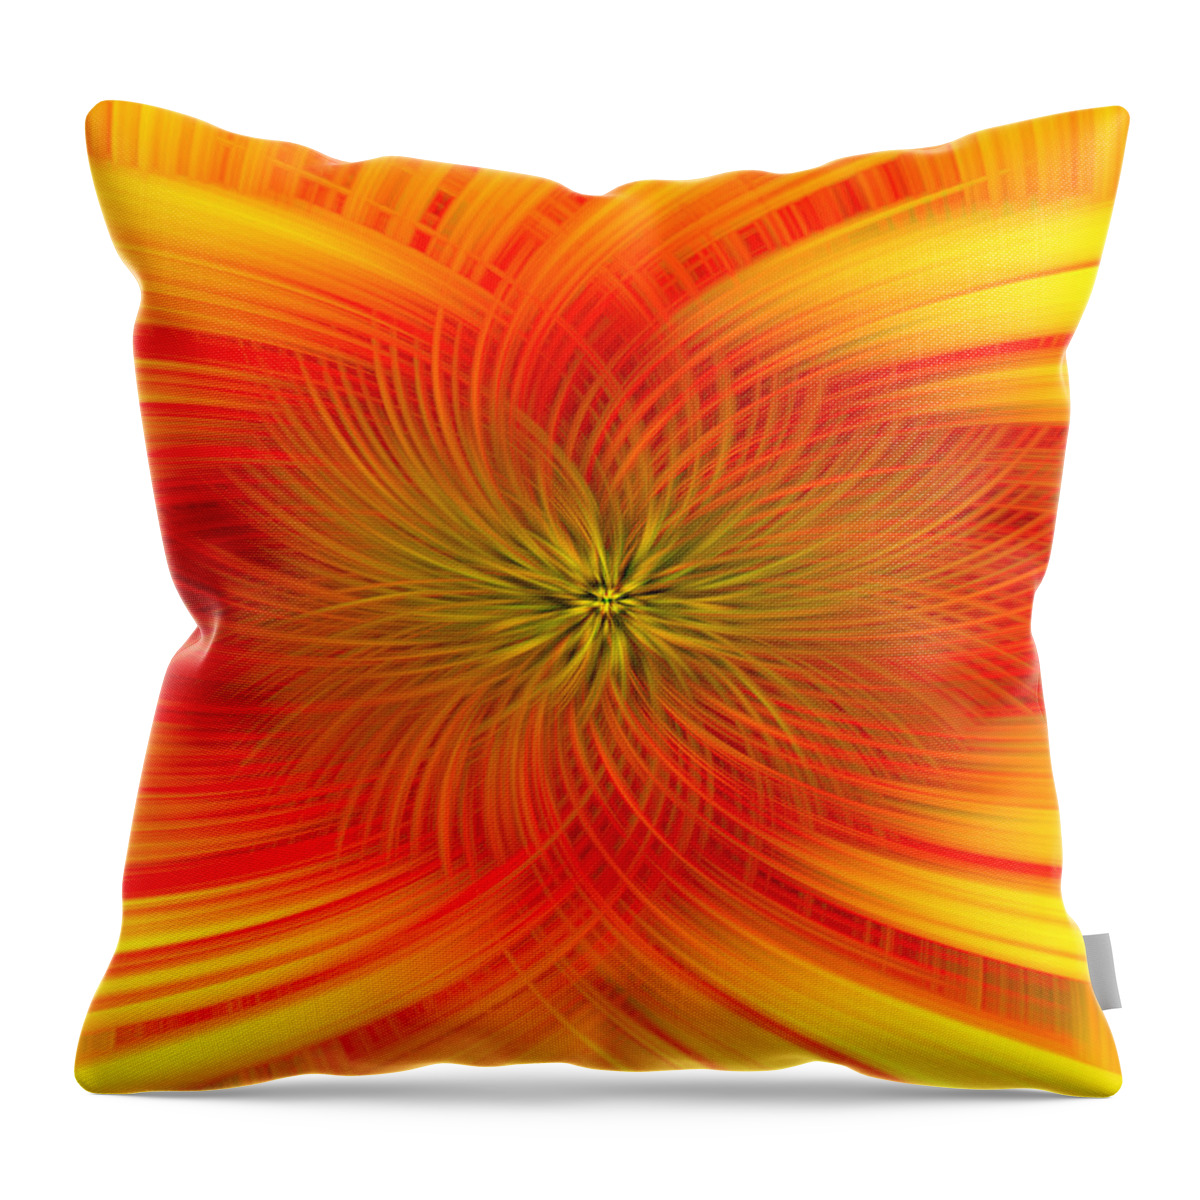 Abstract Throw Pillow featuring the digital art Solar Winds by Roy Pedersen